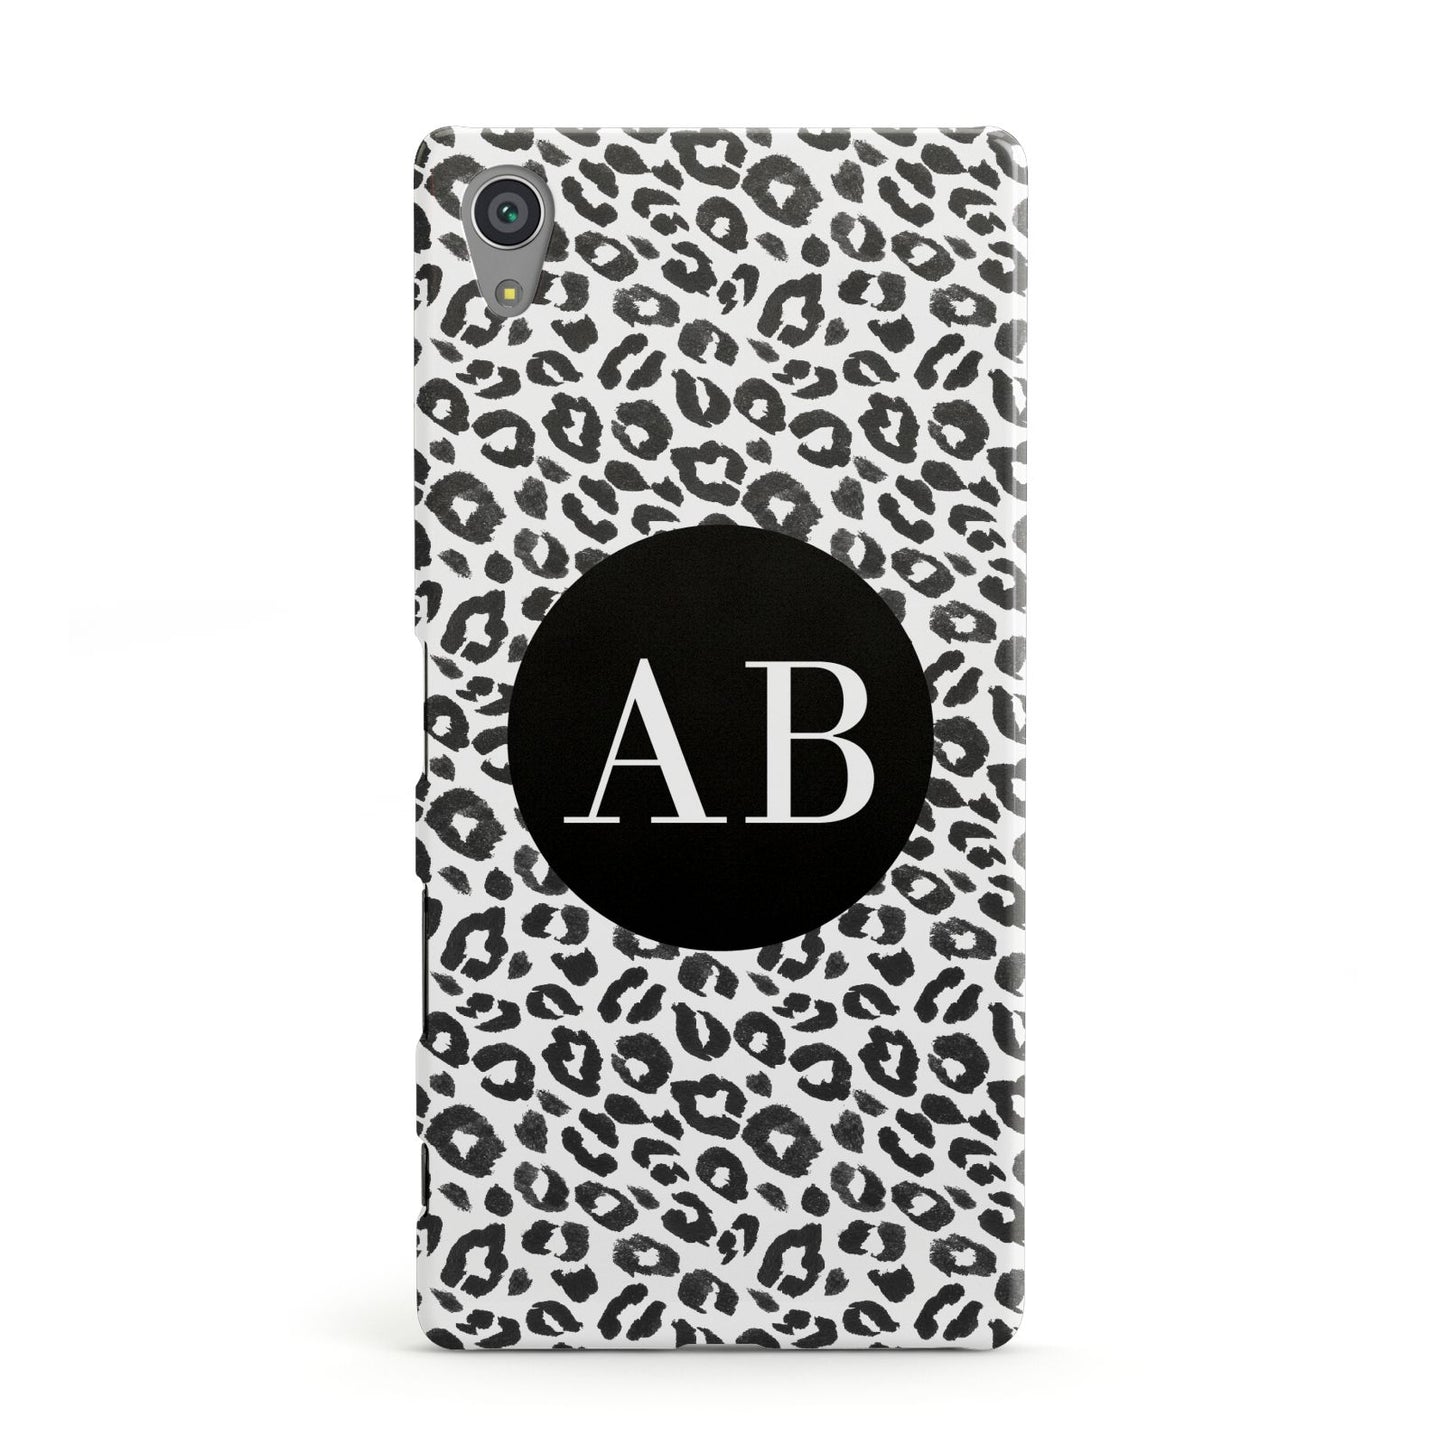 Leopard Print Black and White Sony Xperia Case